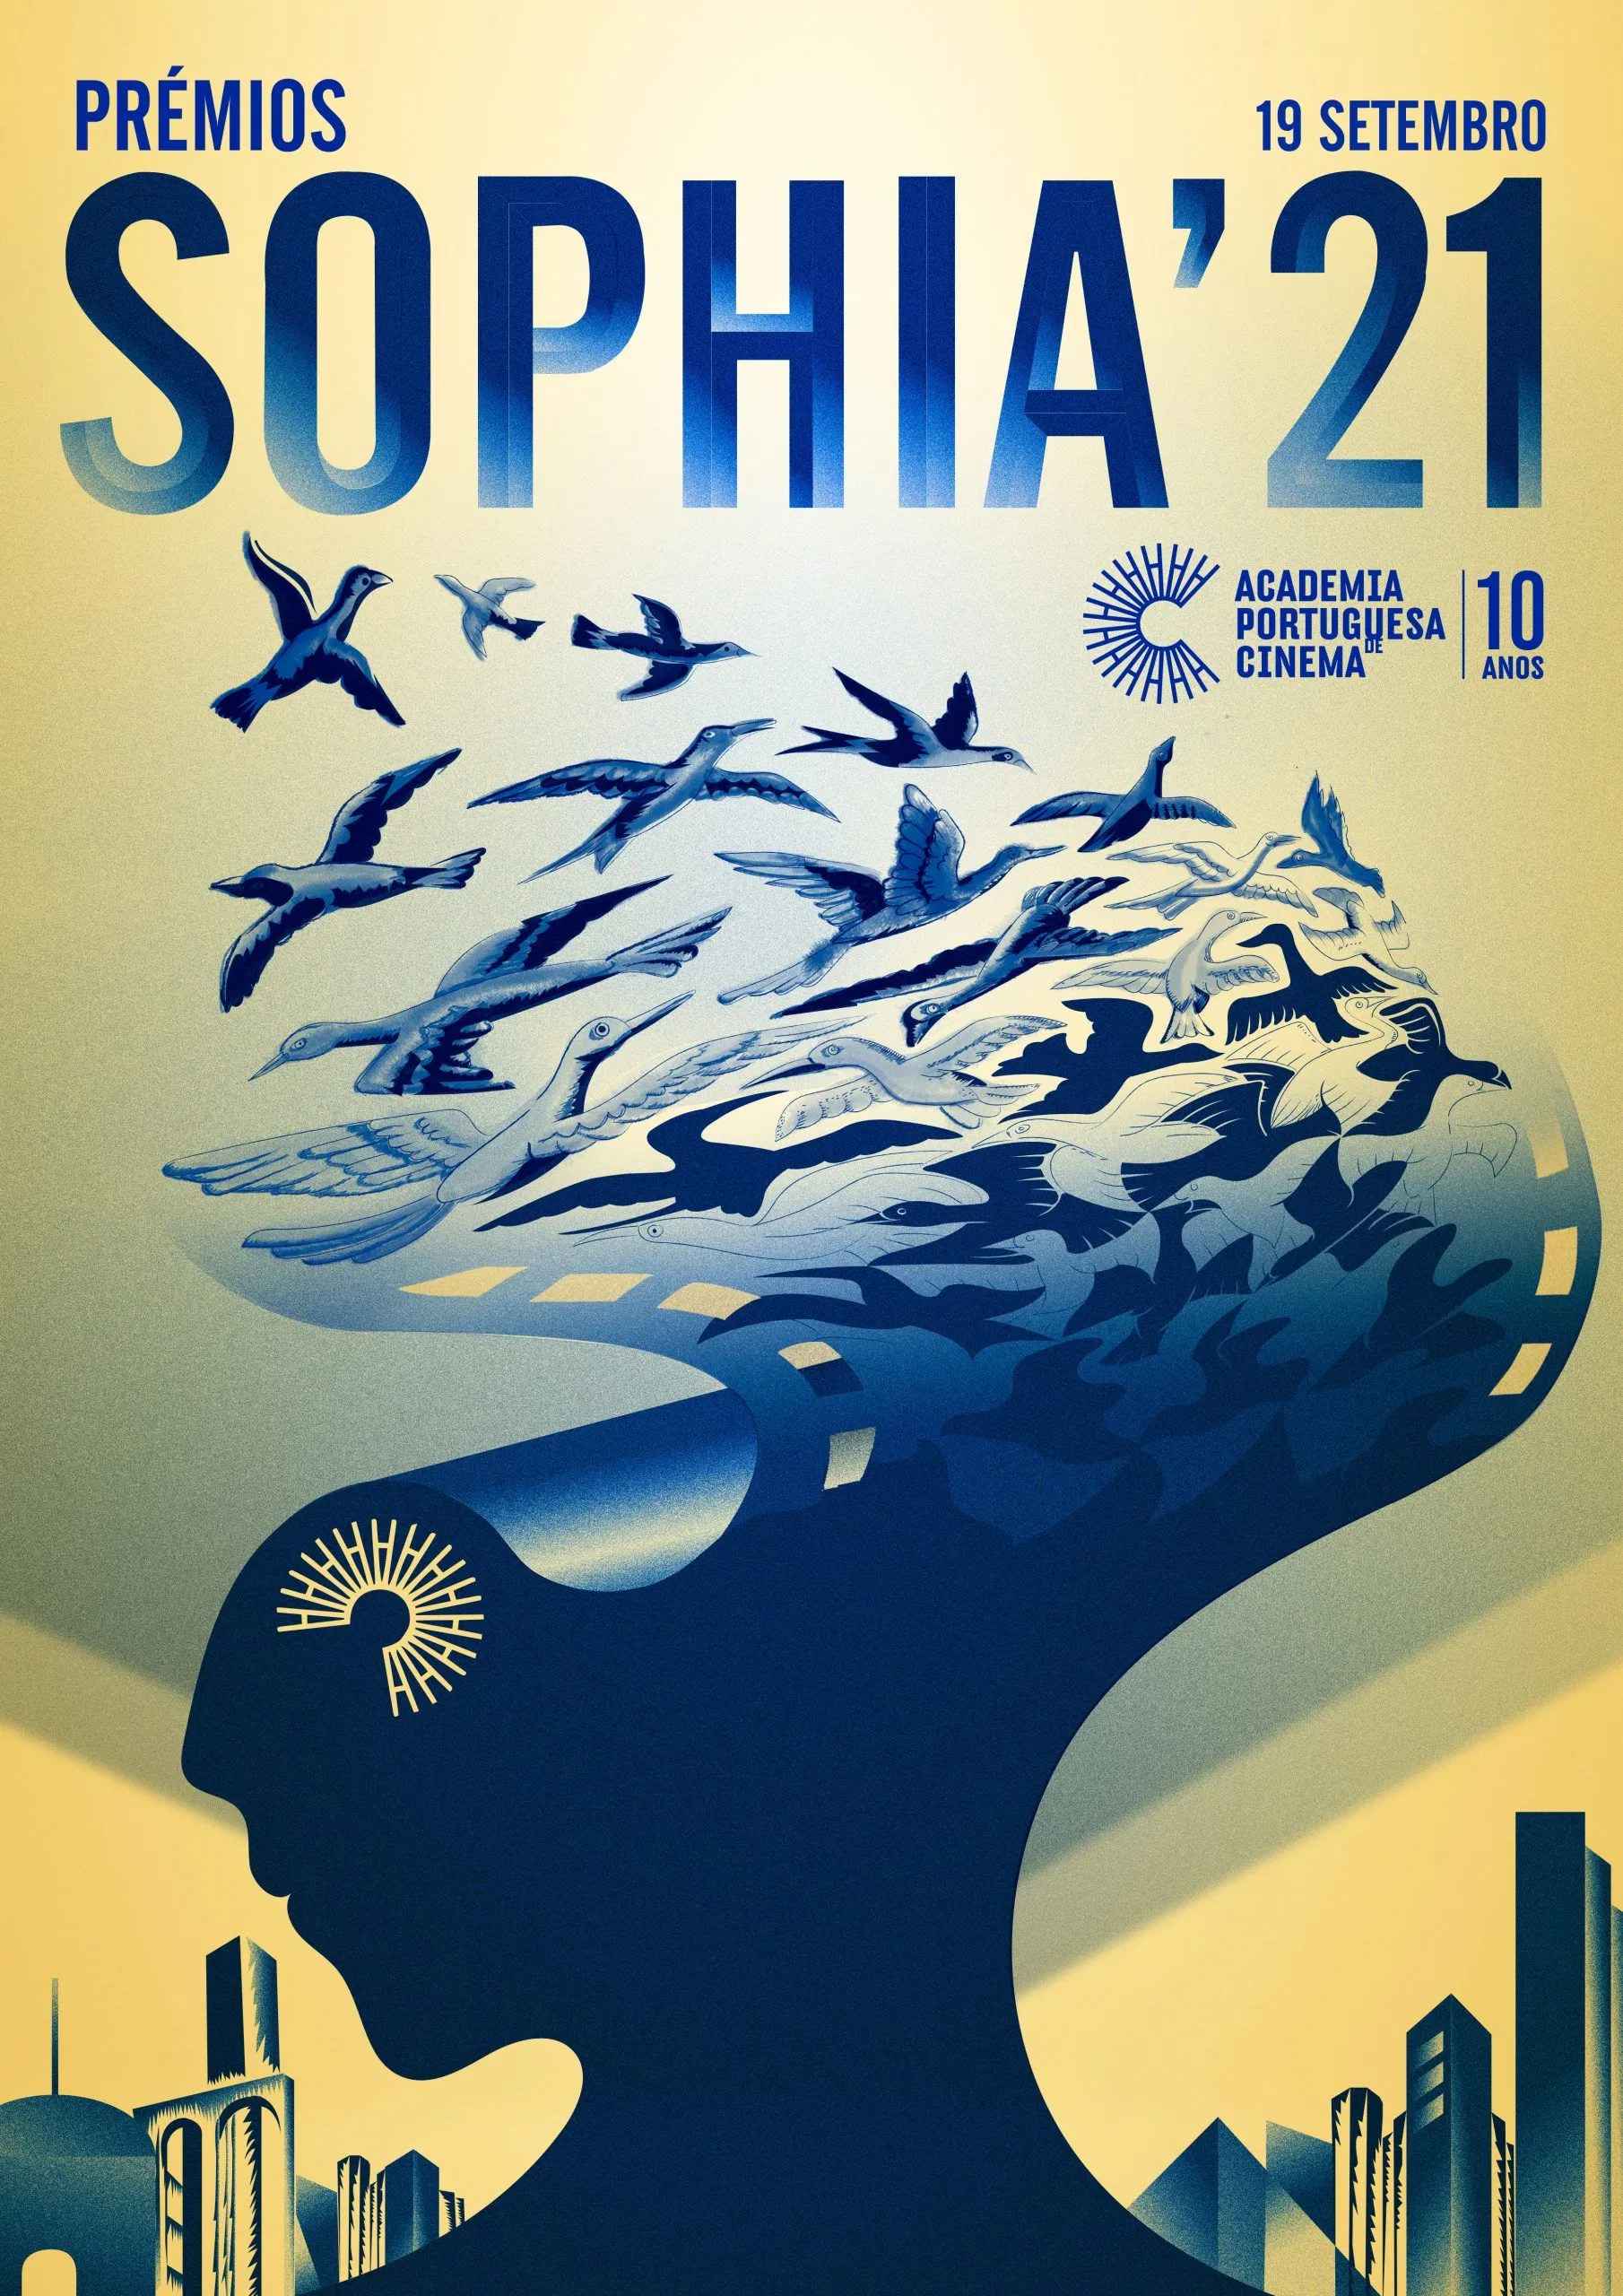 premios sophia 2021 cartaz scaled